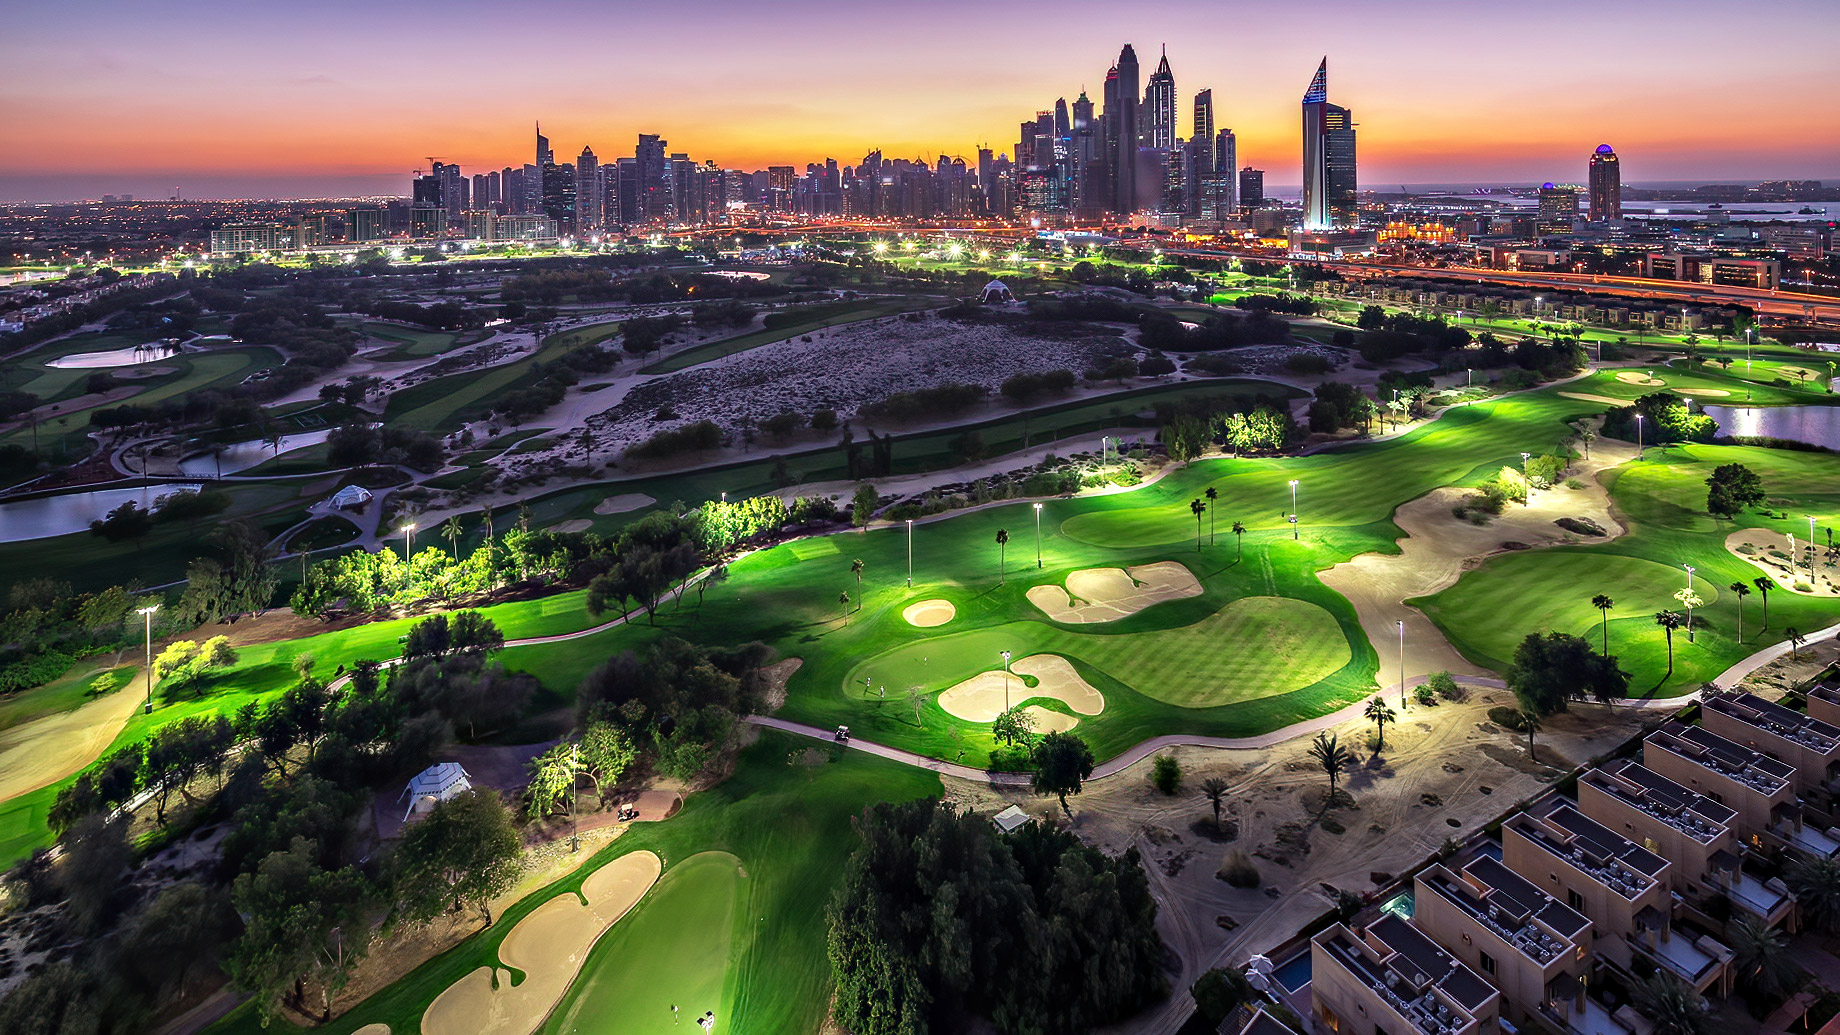 Dubai Hills Golf Course